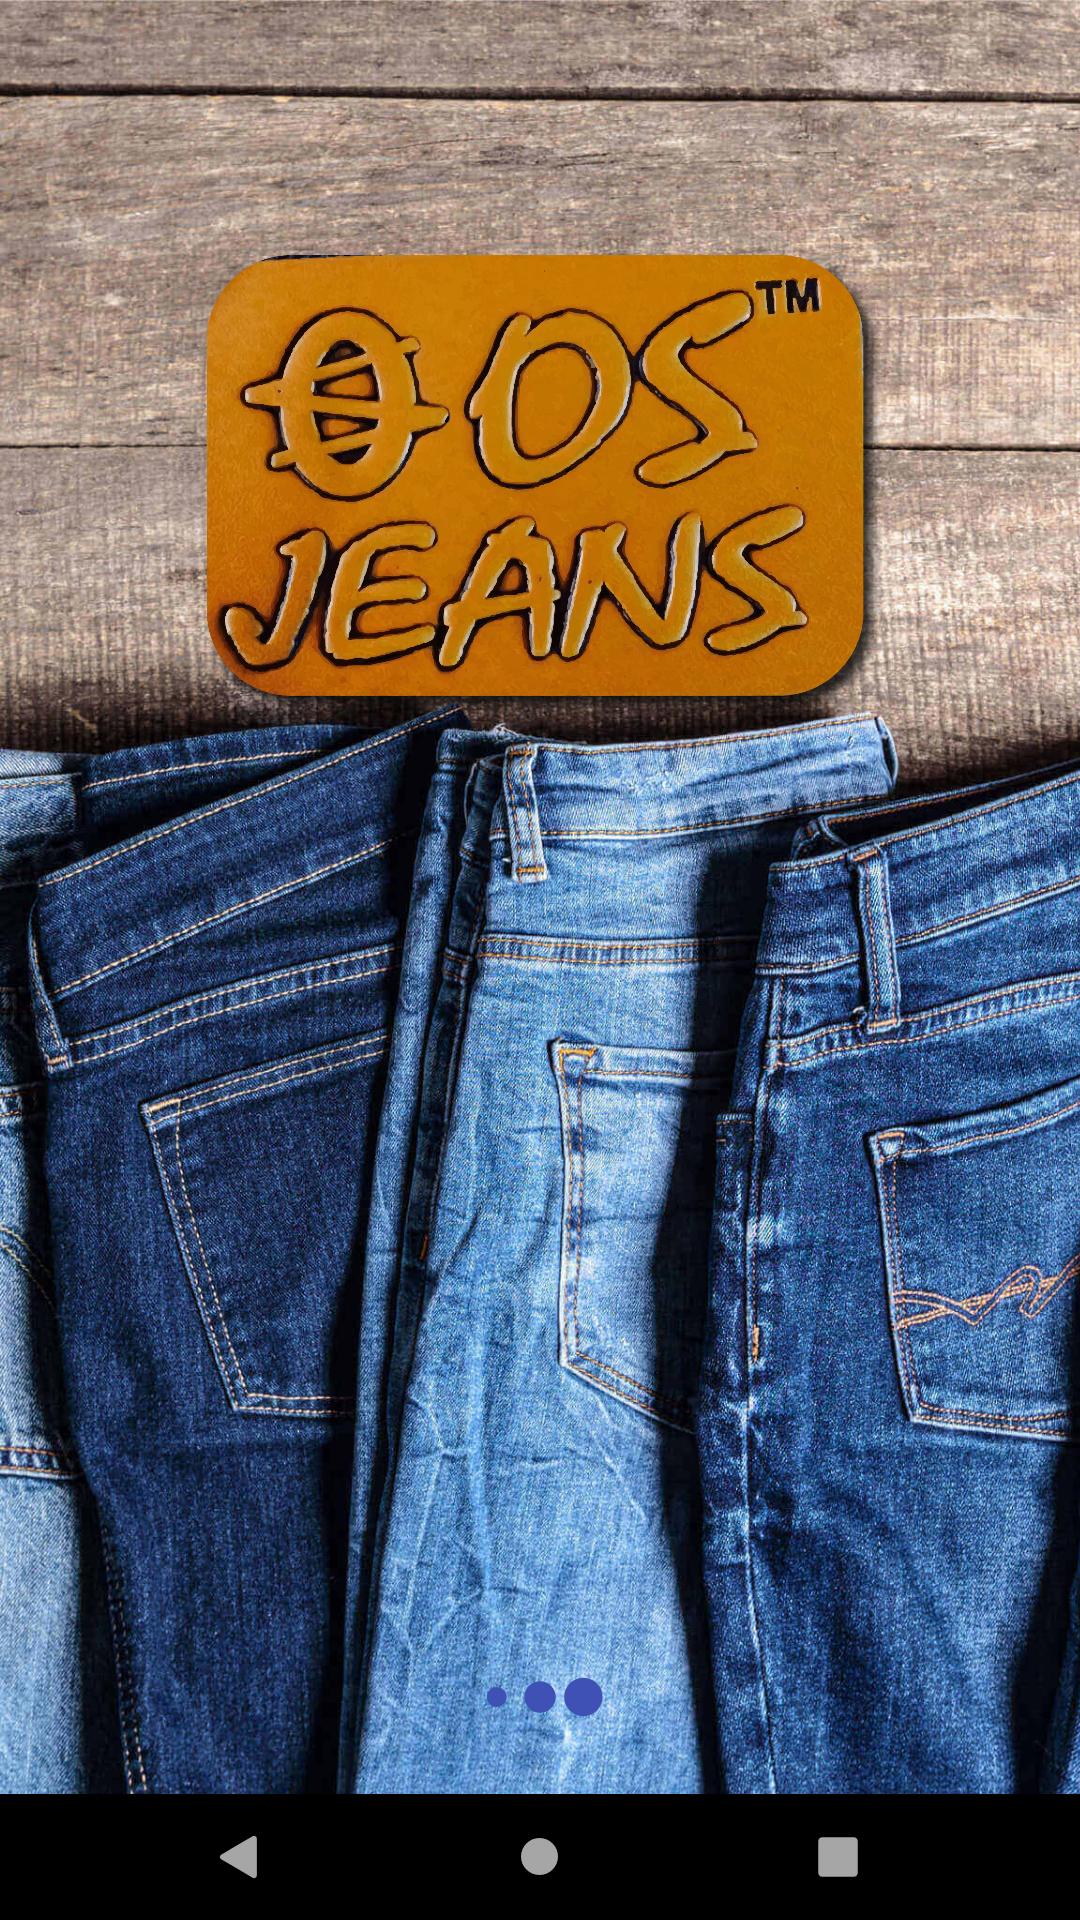 OS Jeans - Surat APK voor Android Download